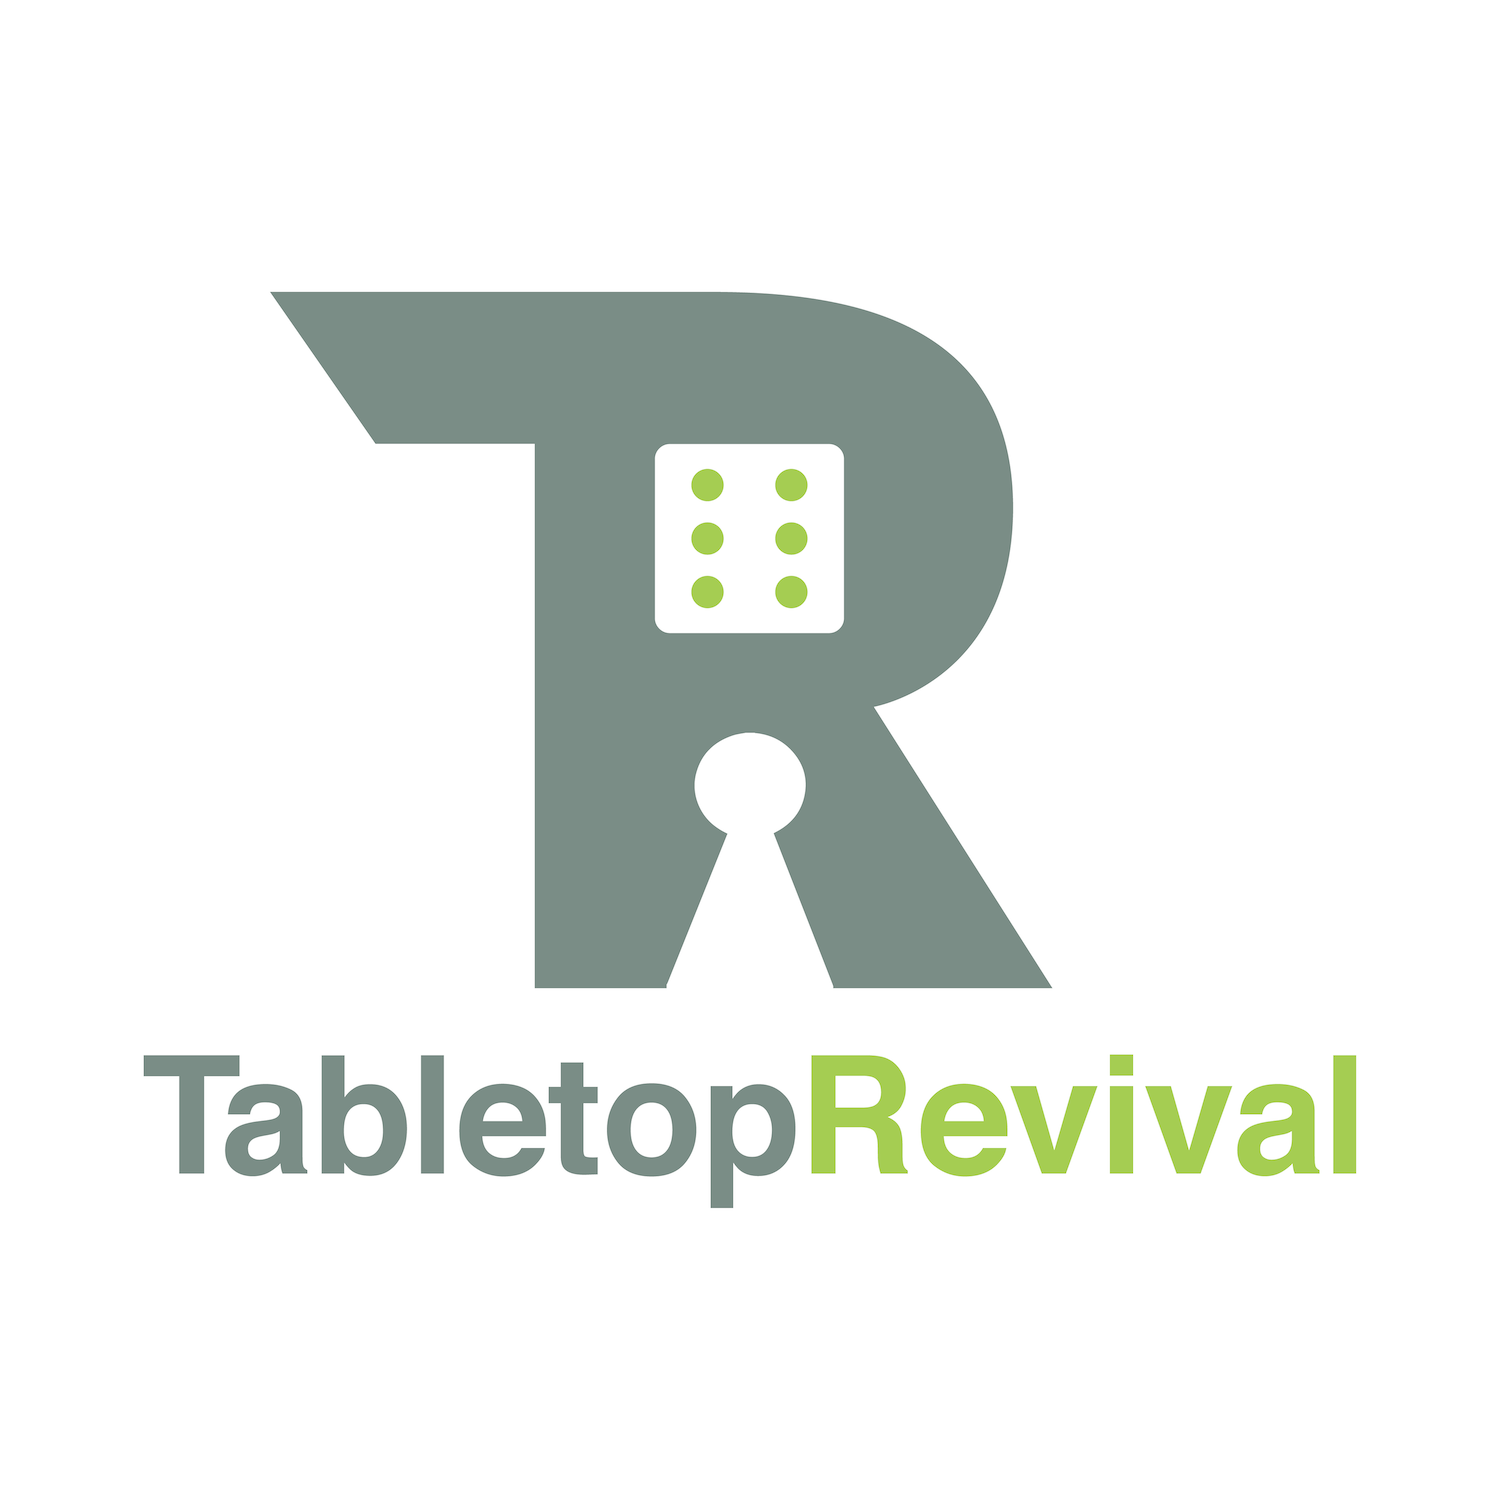 tabletopRevival_logo-03.png